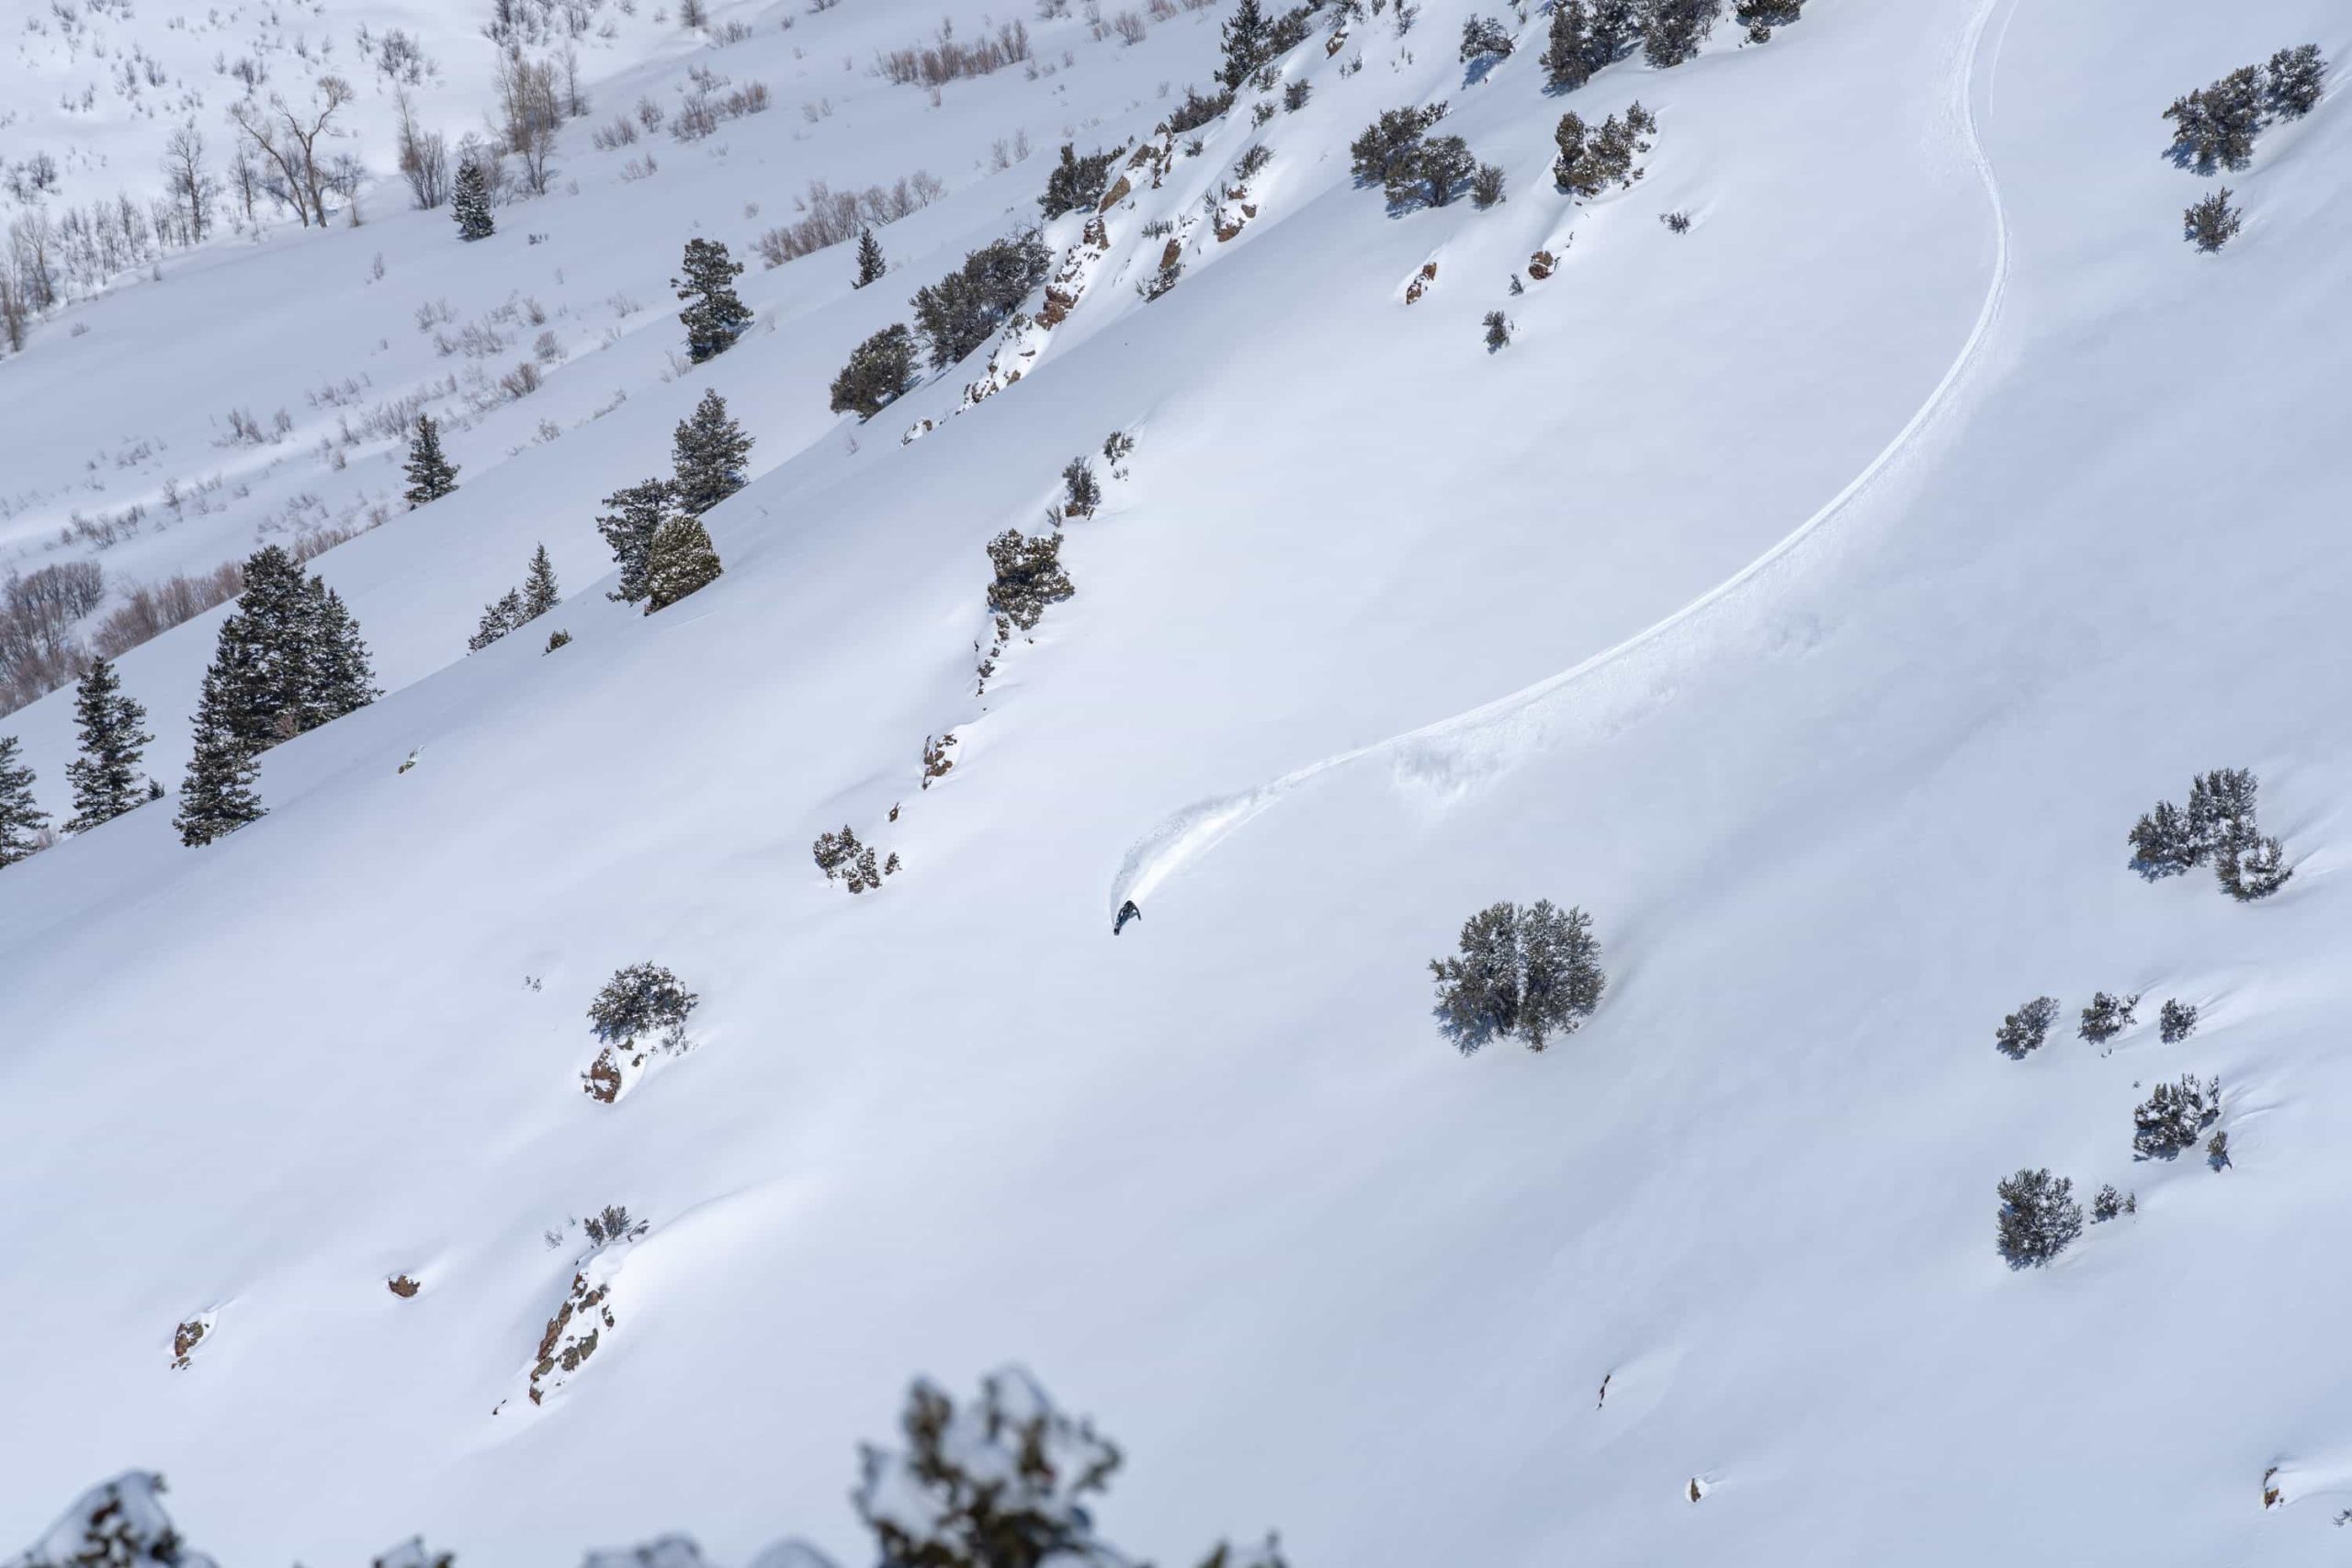 skier carving fresh tracks down snowy mountain